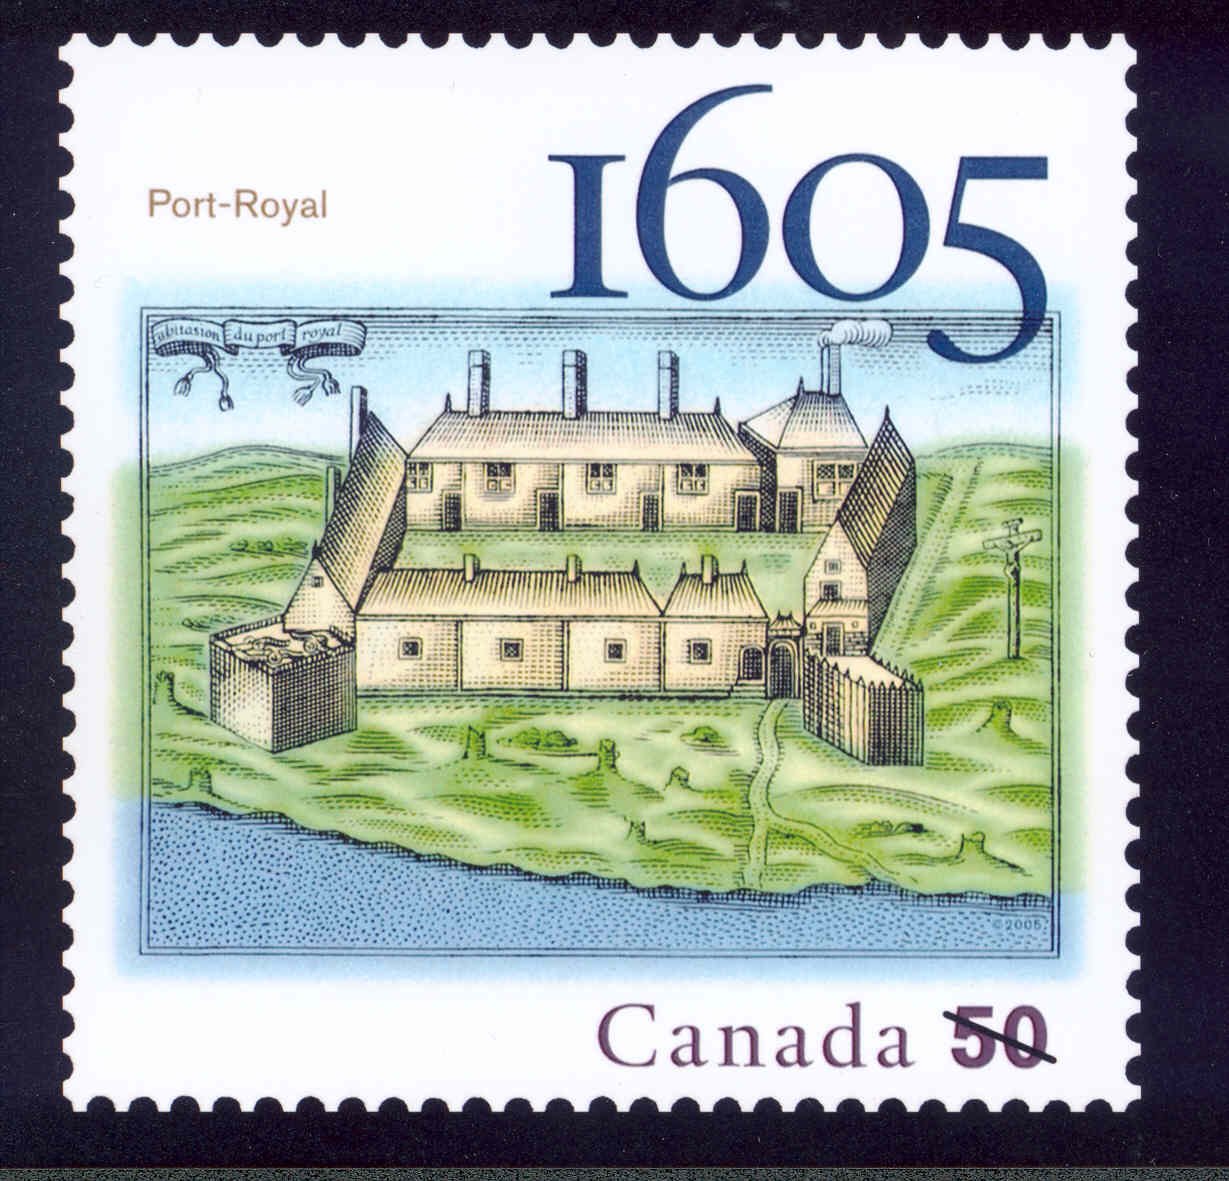 Port Royal 400th anniversary commemorative stamp, 2005